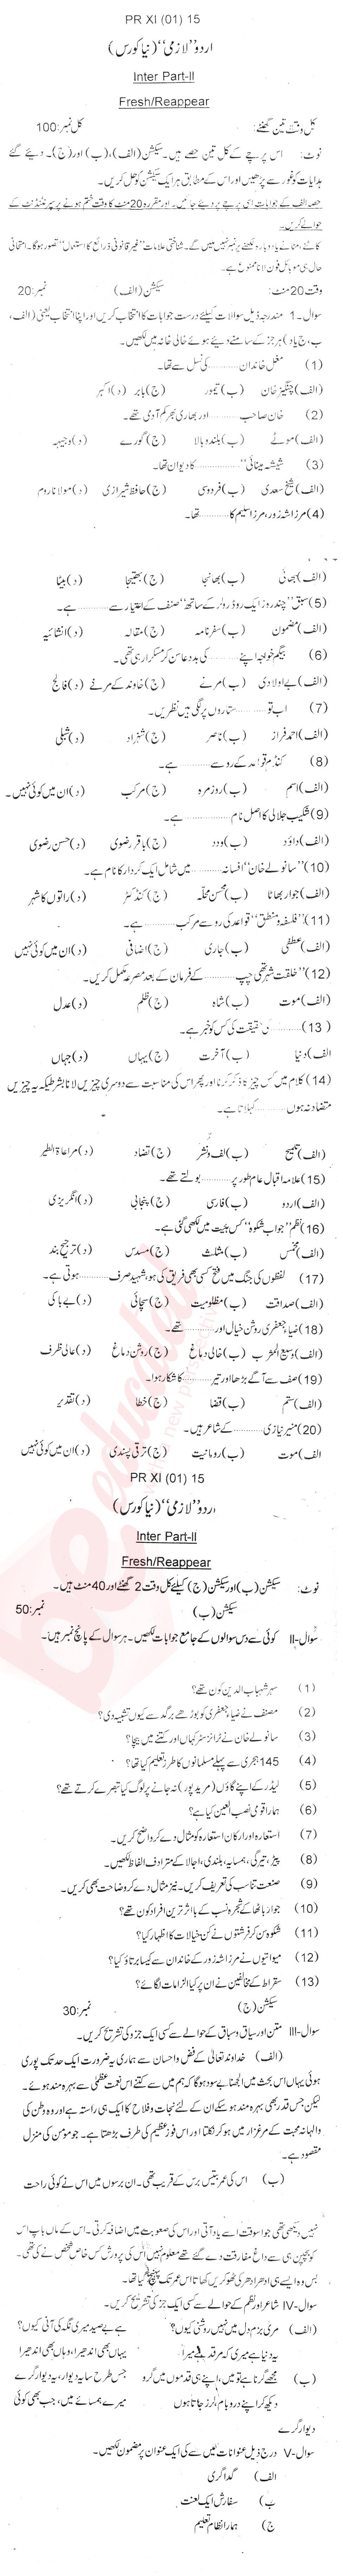 Urdu 12th class Past Paper Group 1 BISE Bannu 2015